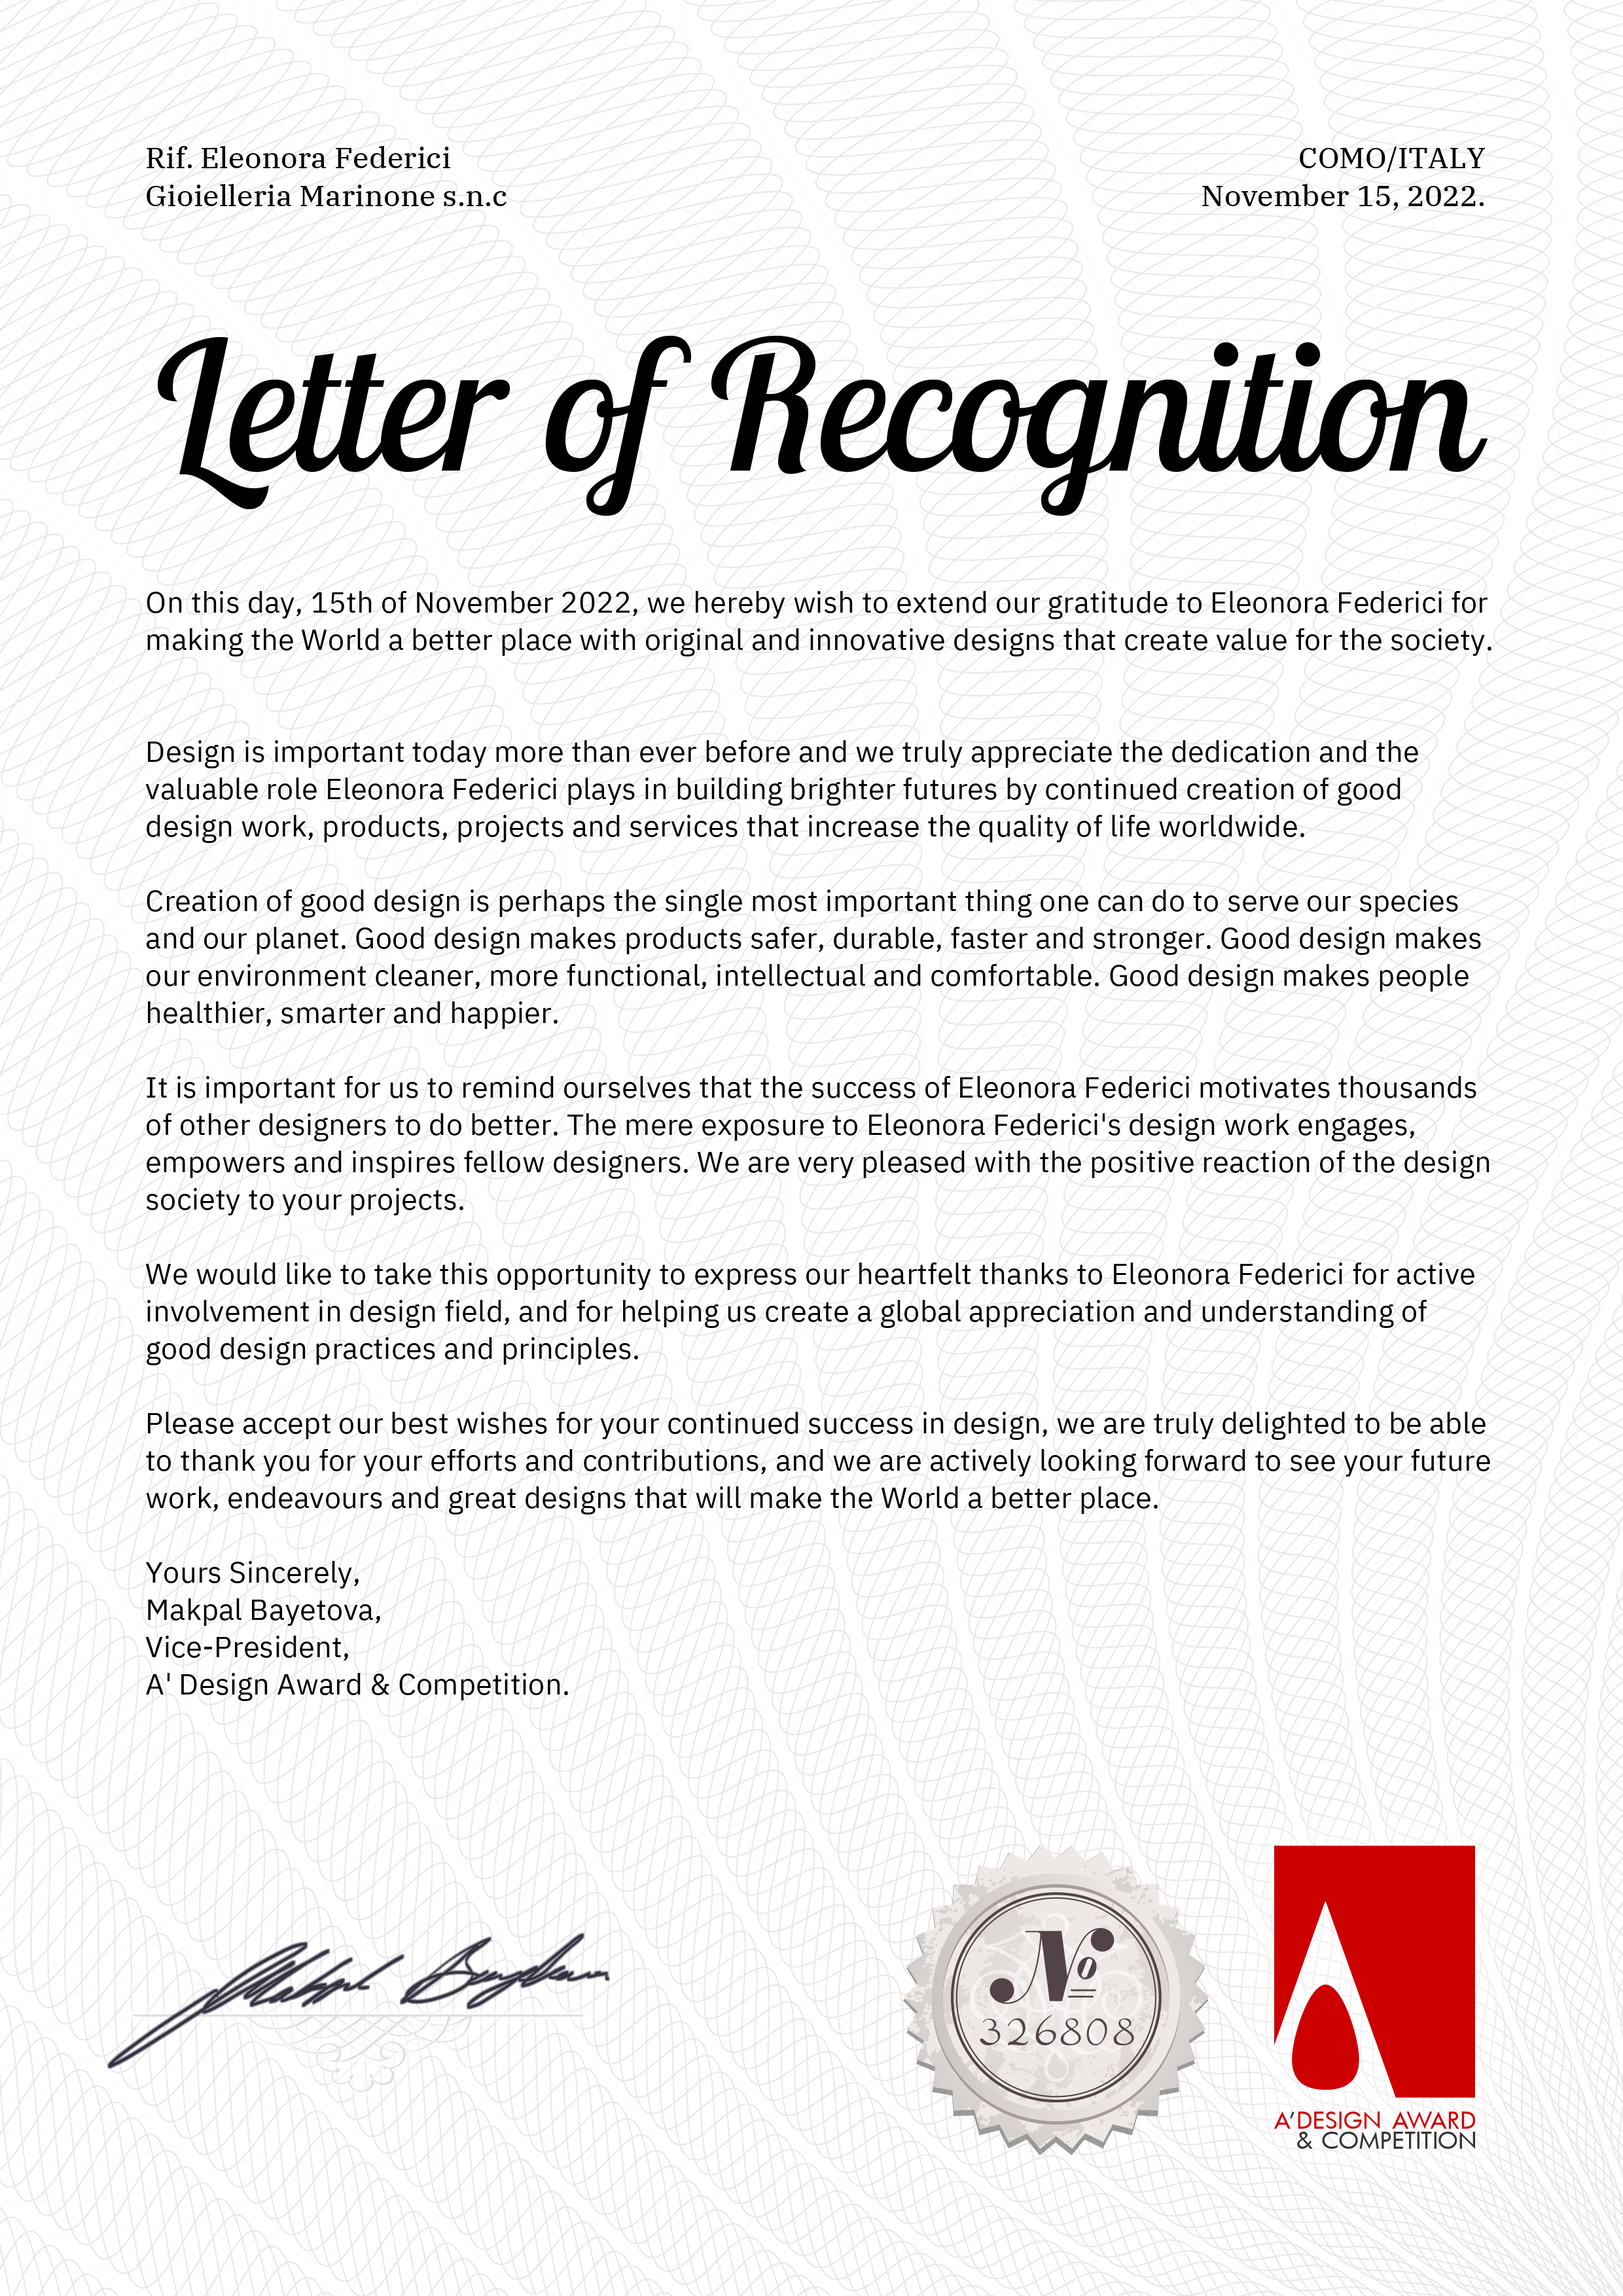 A' Design Award letter of recognition